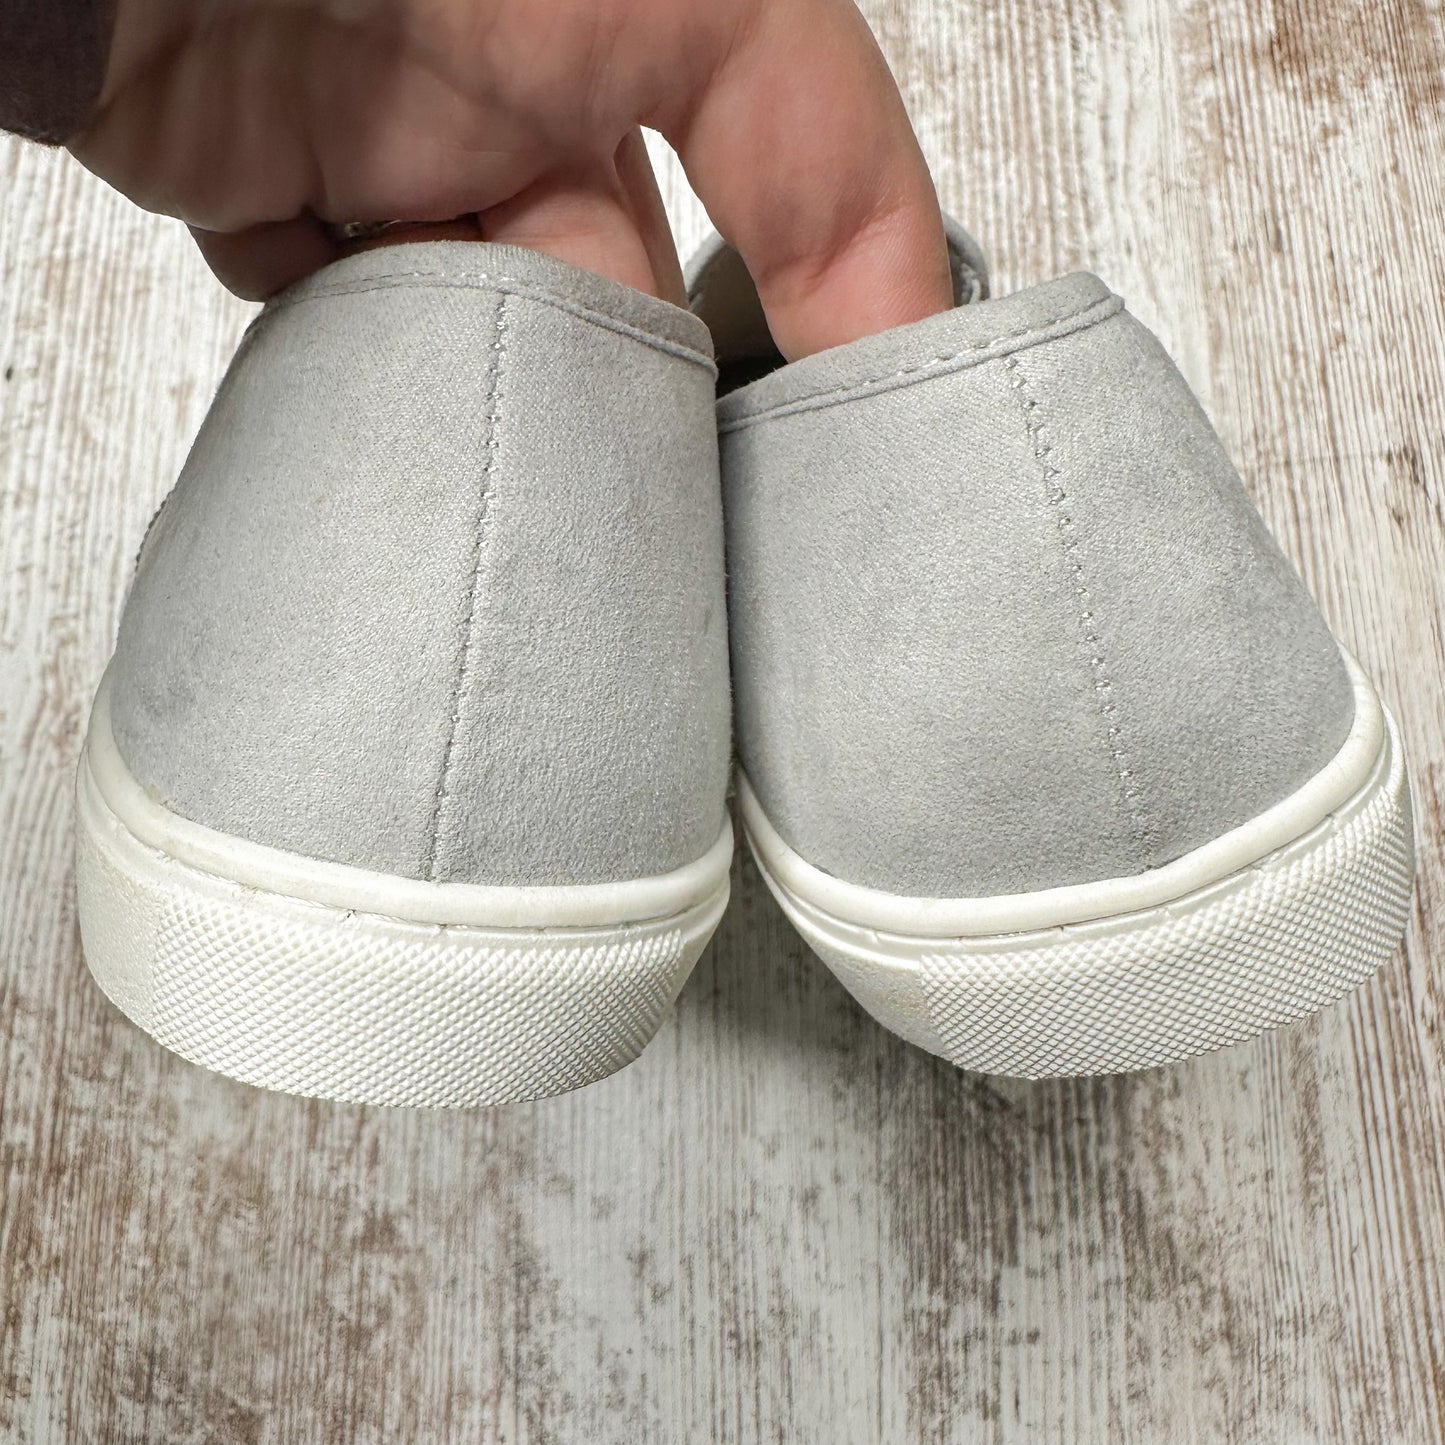 Torrid New Rhinestone Embellished Slip On Sneakers Size 9.5